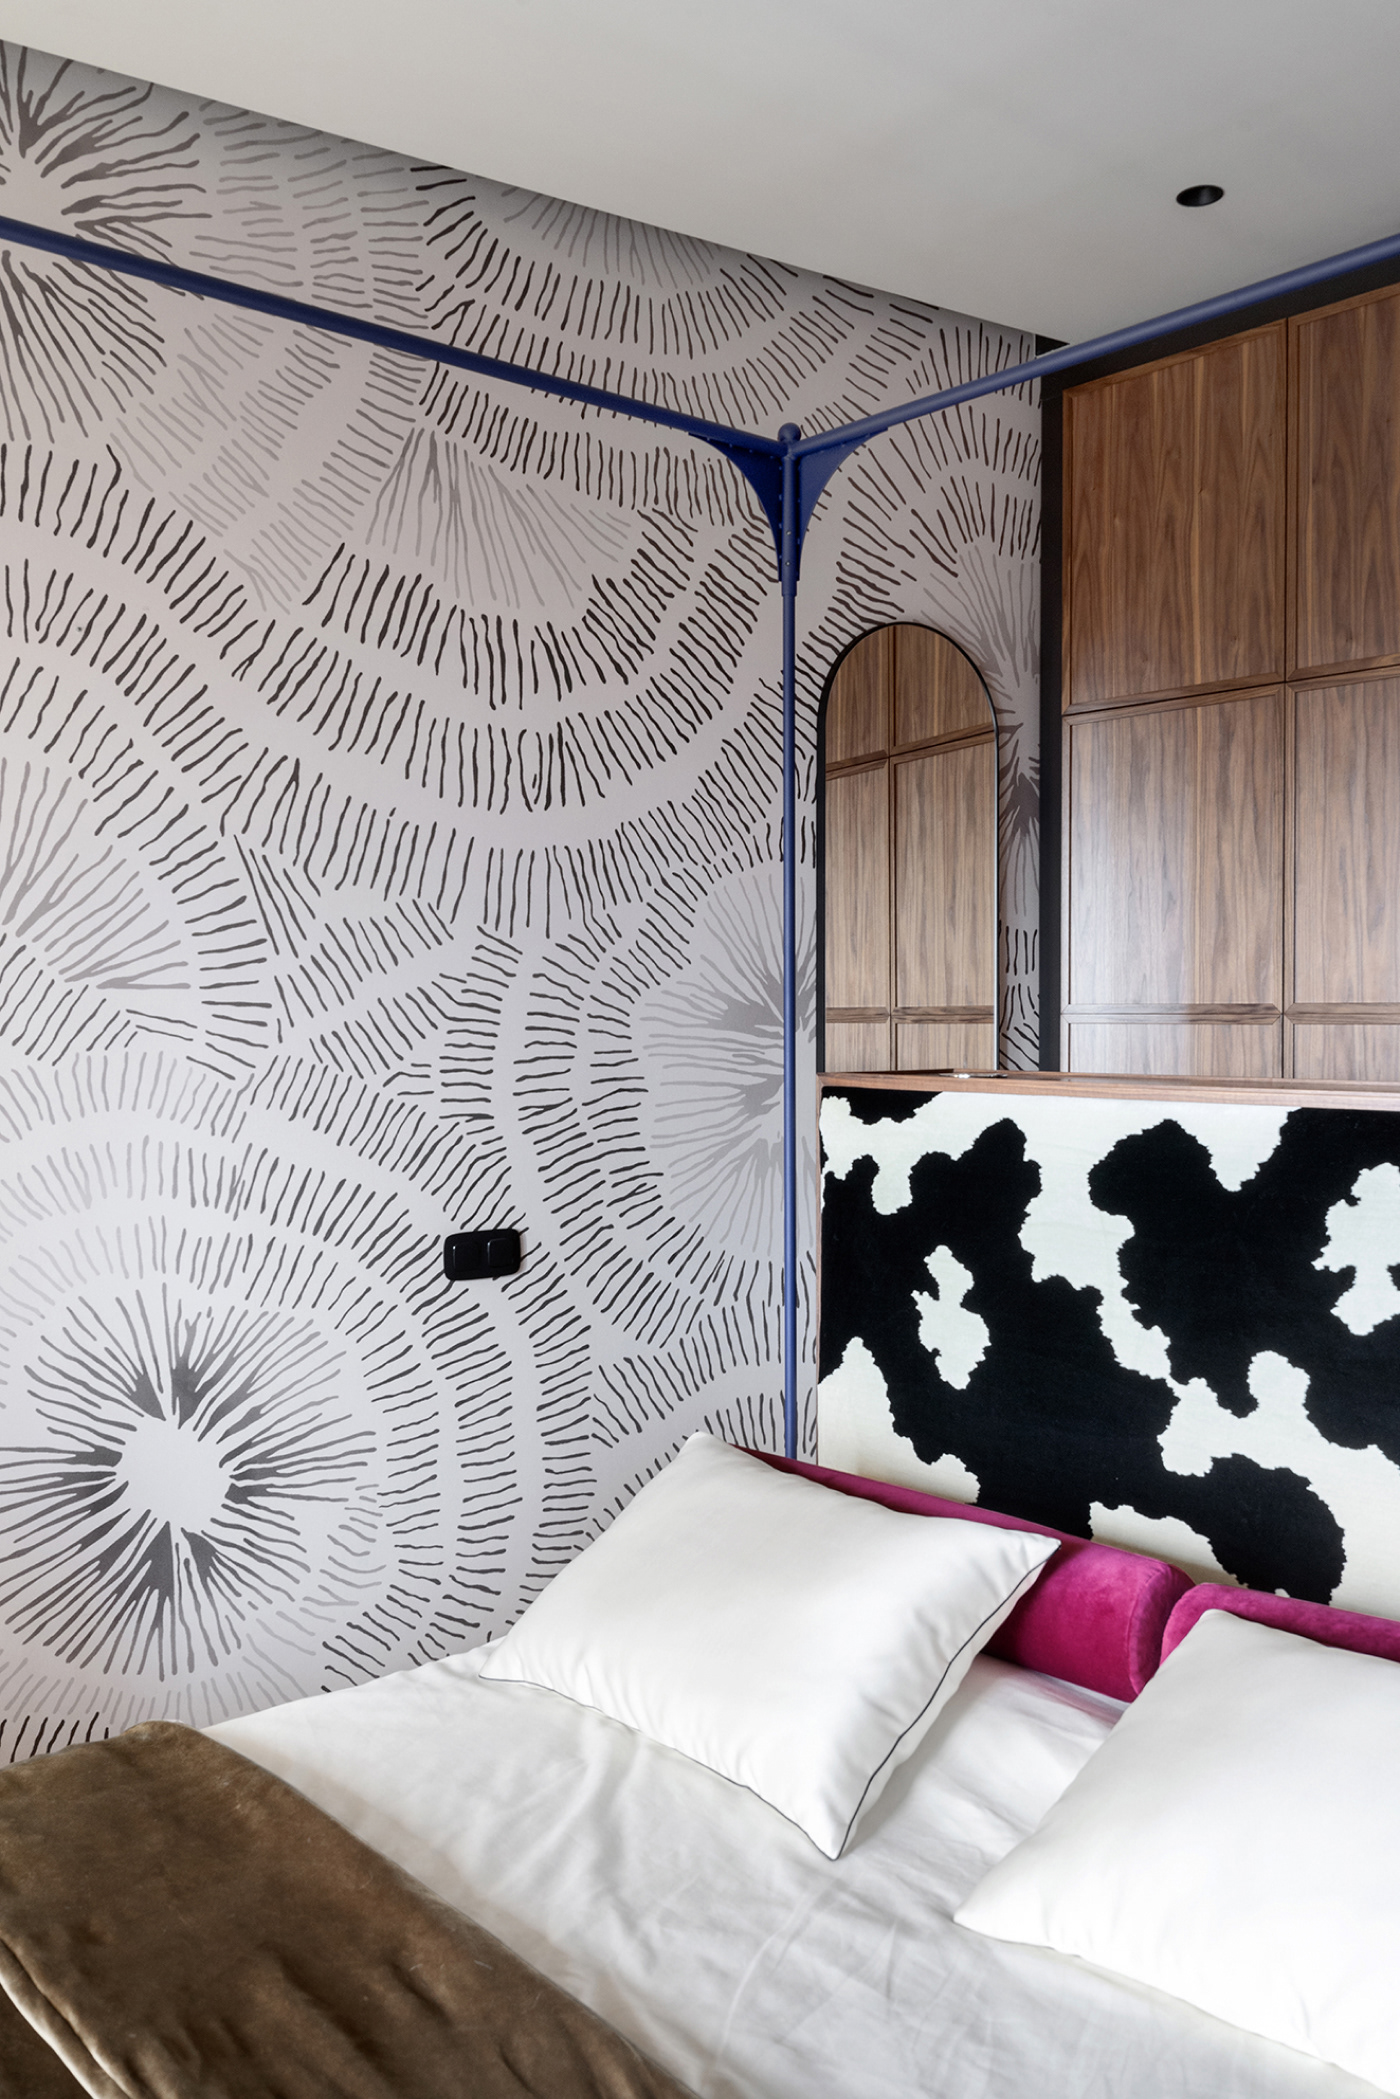 3D 3ds max architecture bathroom bedroom Interior interior design  kitchen Render visualization